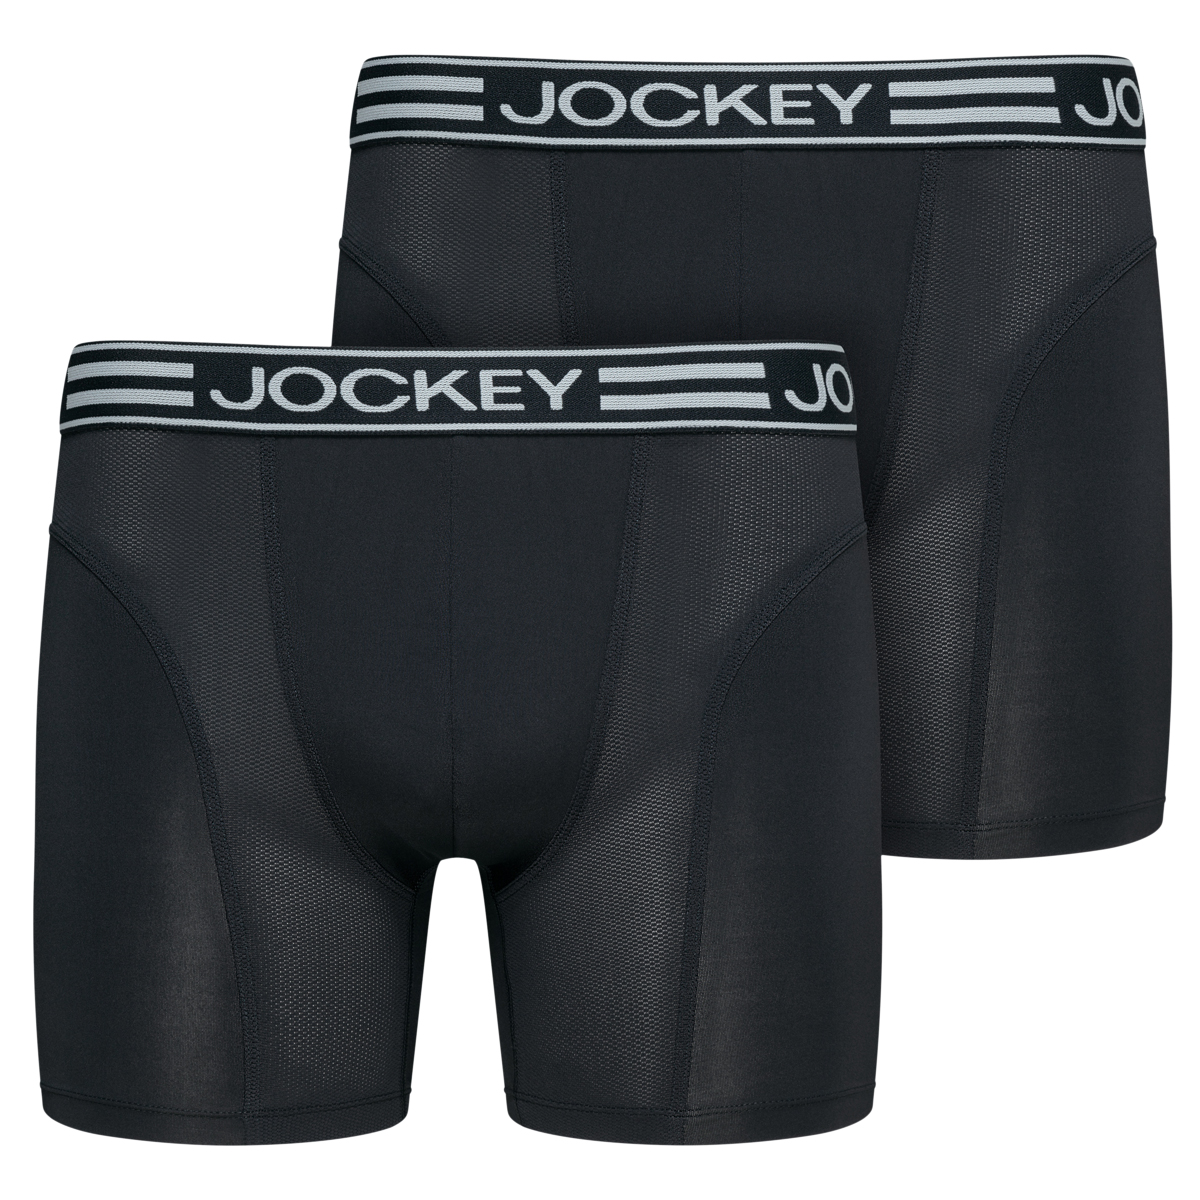 Jockey Doppelpack Boxer Trunk schwarz große Größen